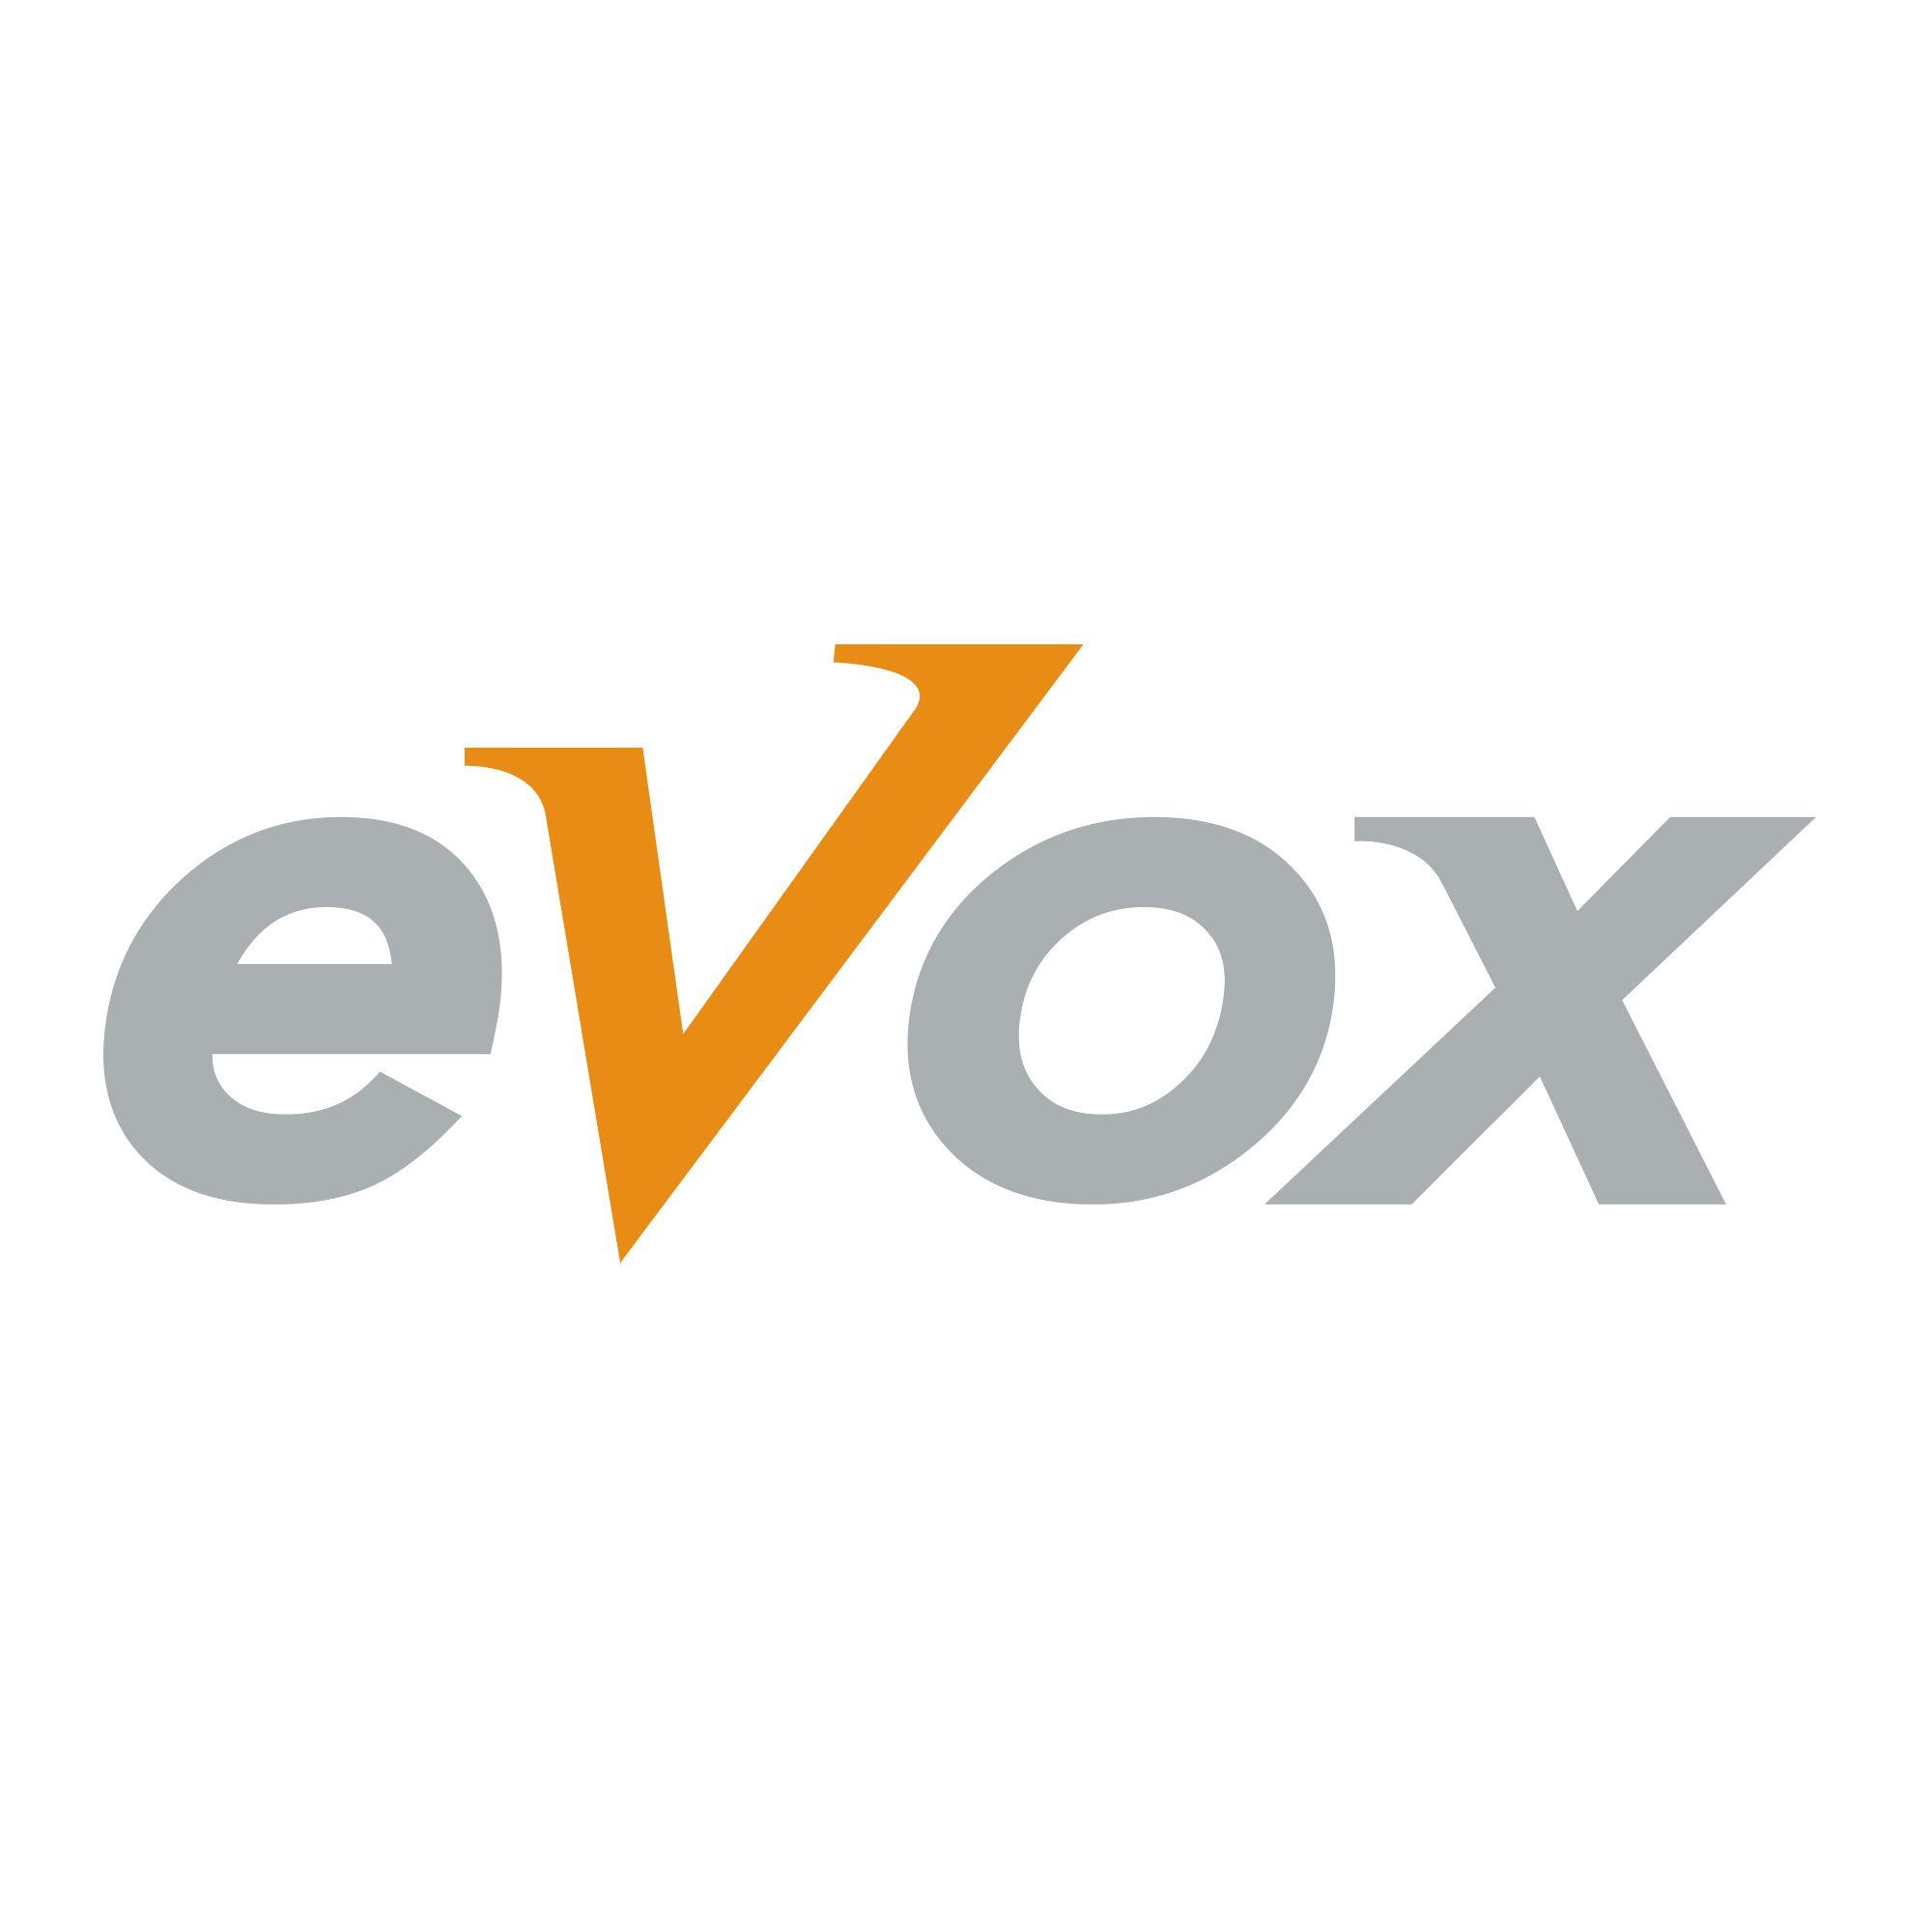 Evo X Logo - Electric bike to energize your ride | Evox